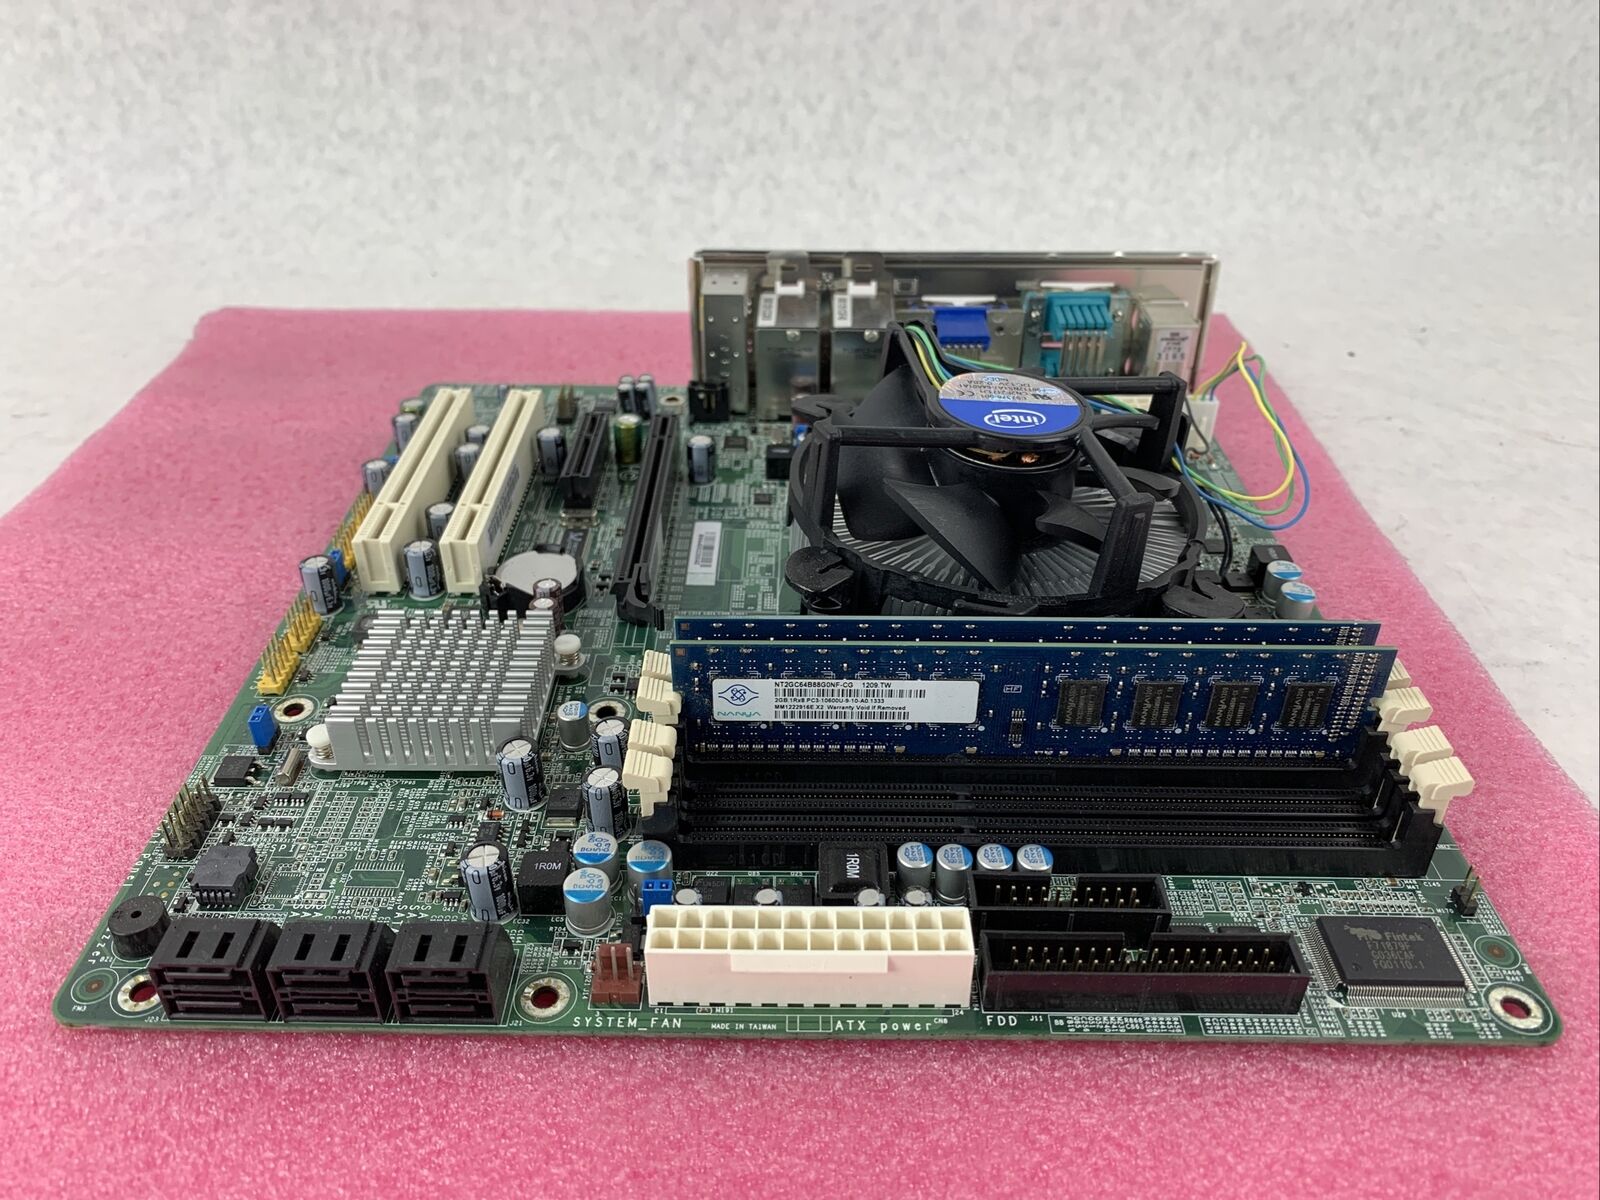 DFI PT330 Motherboard Intel Core i5-660 3.33GHz 4GB RAM w/ I/O Shield